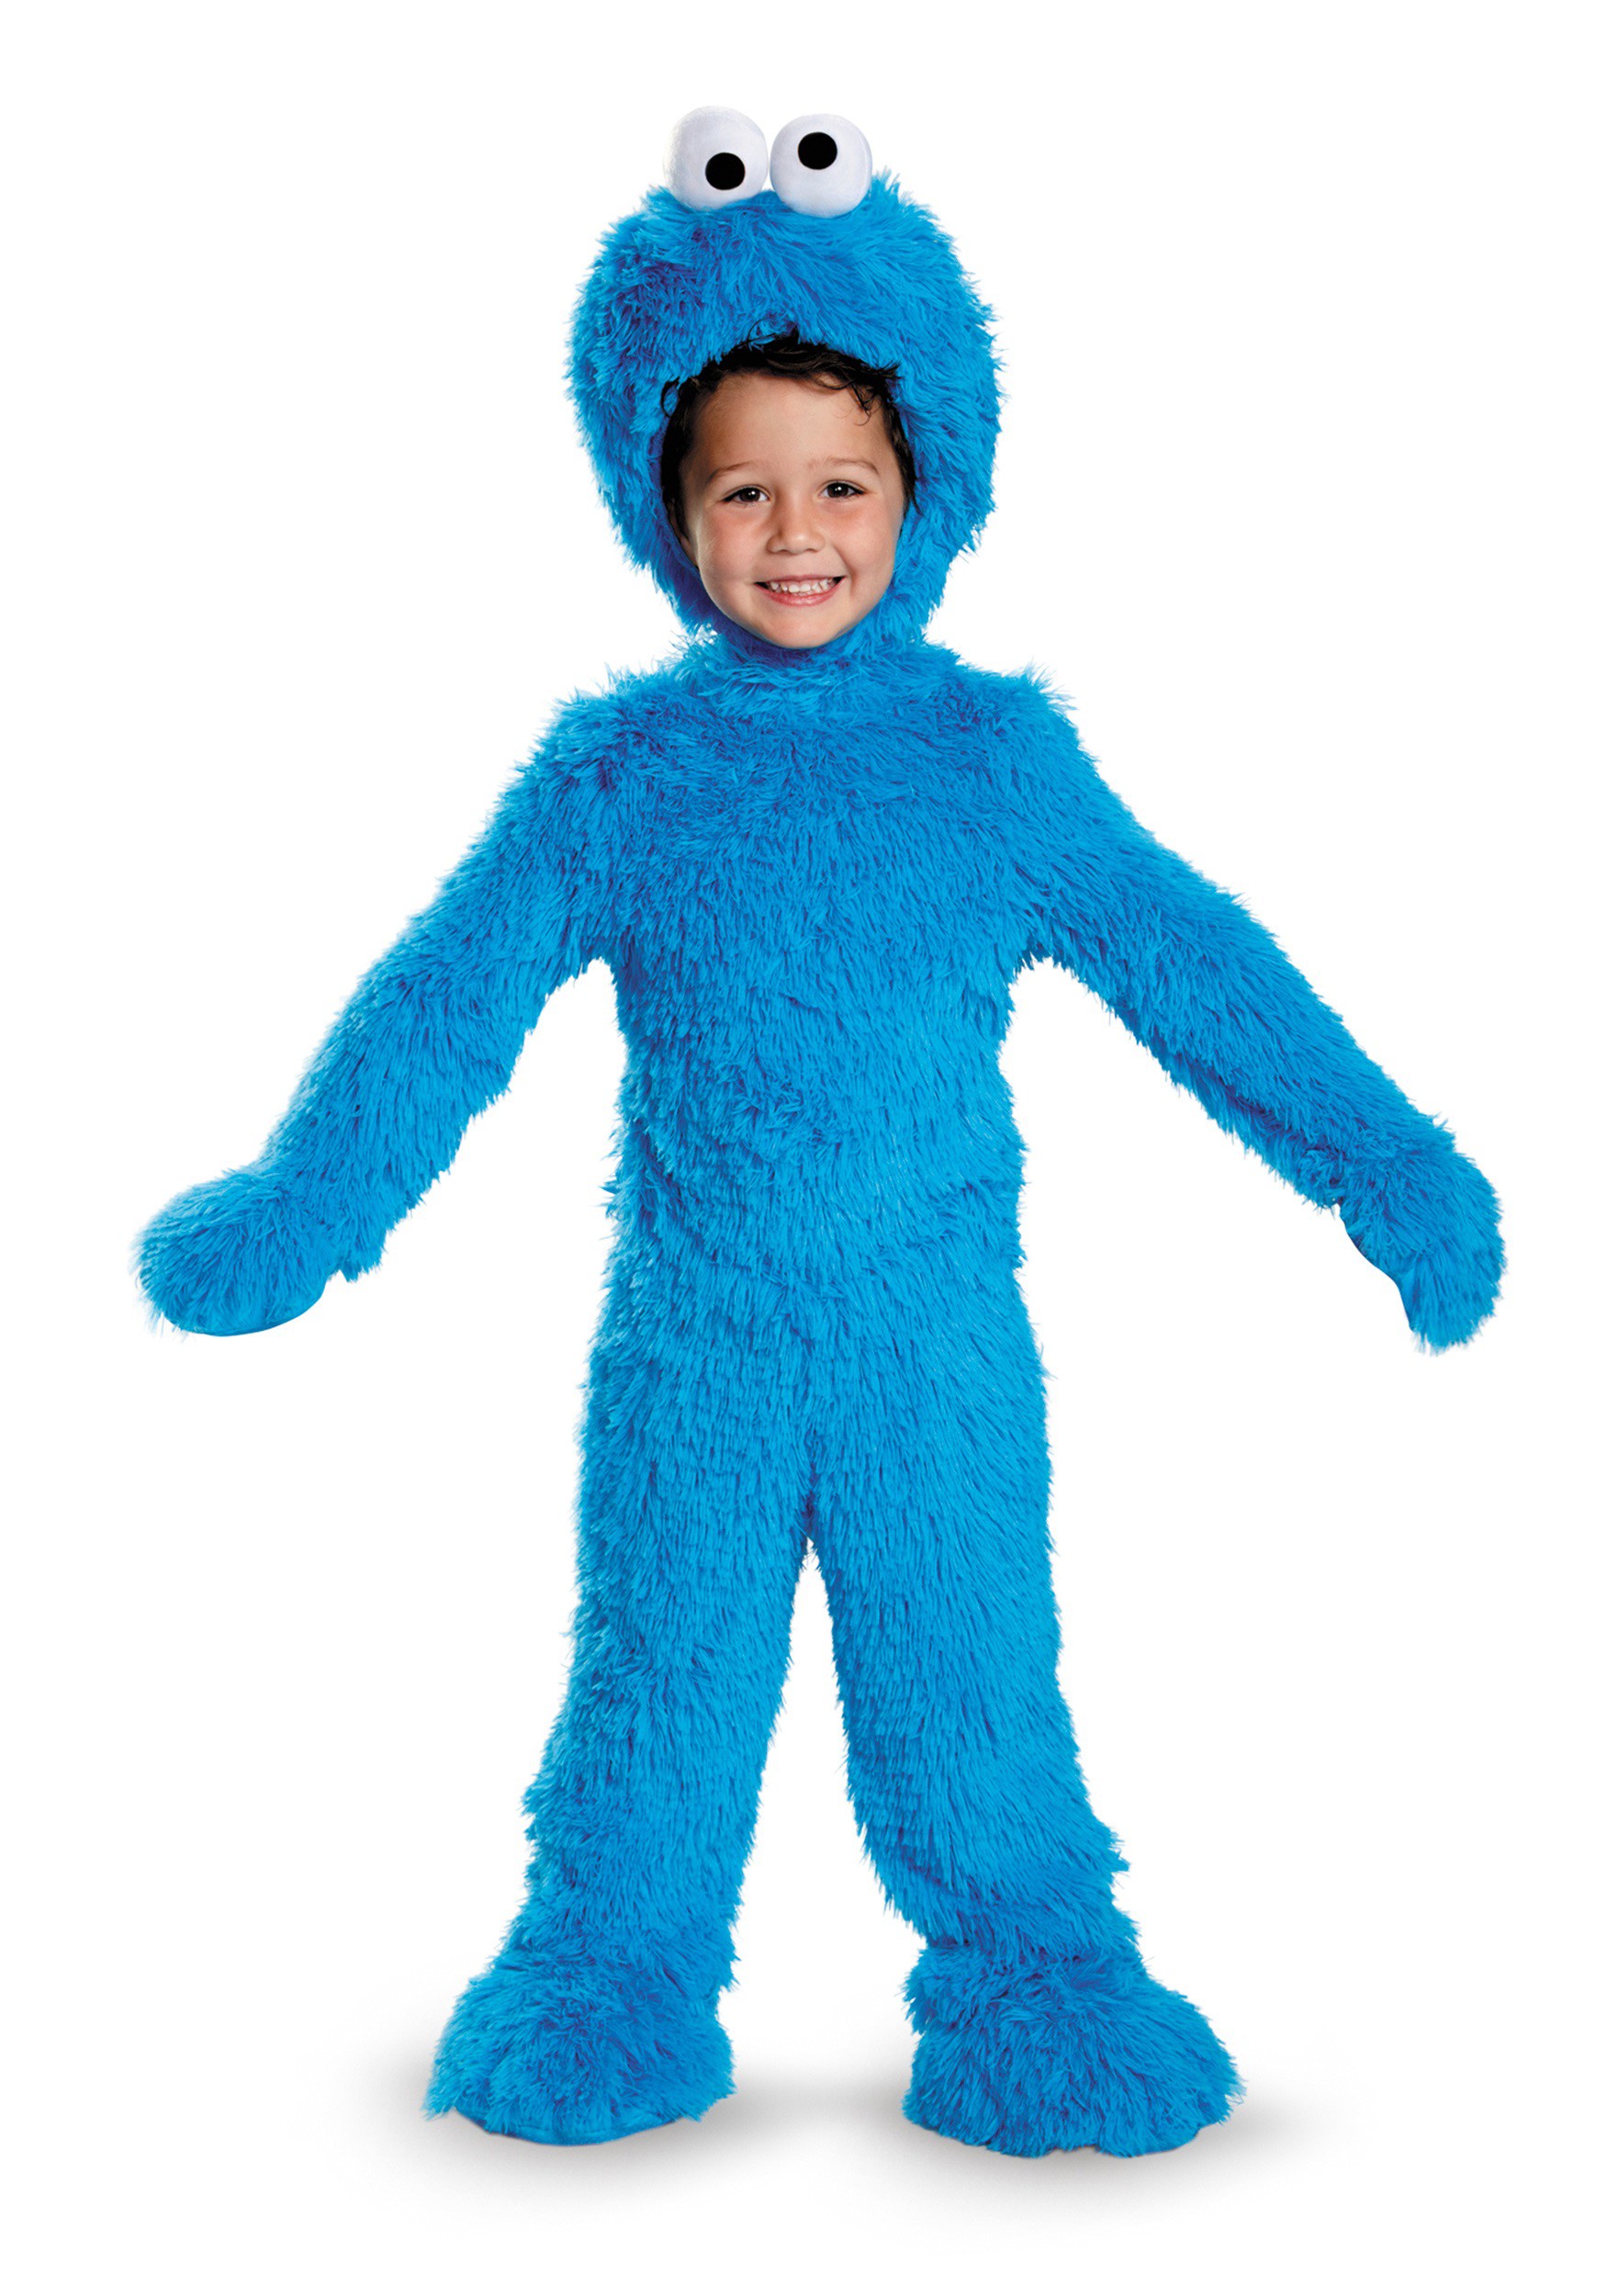 Cookie Monster Plush Costume for Infant/Toddler